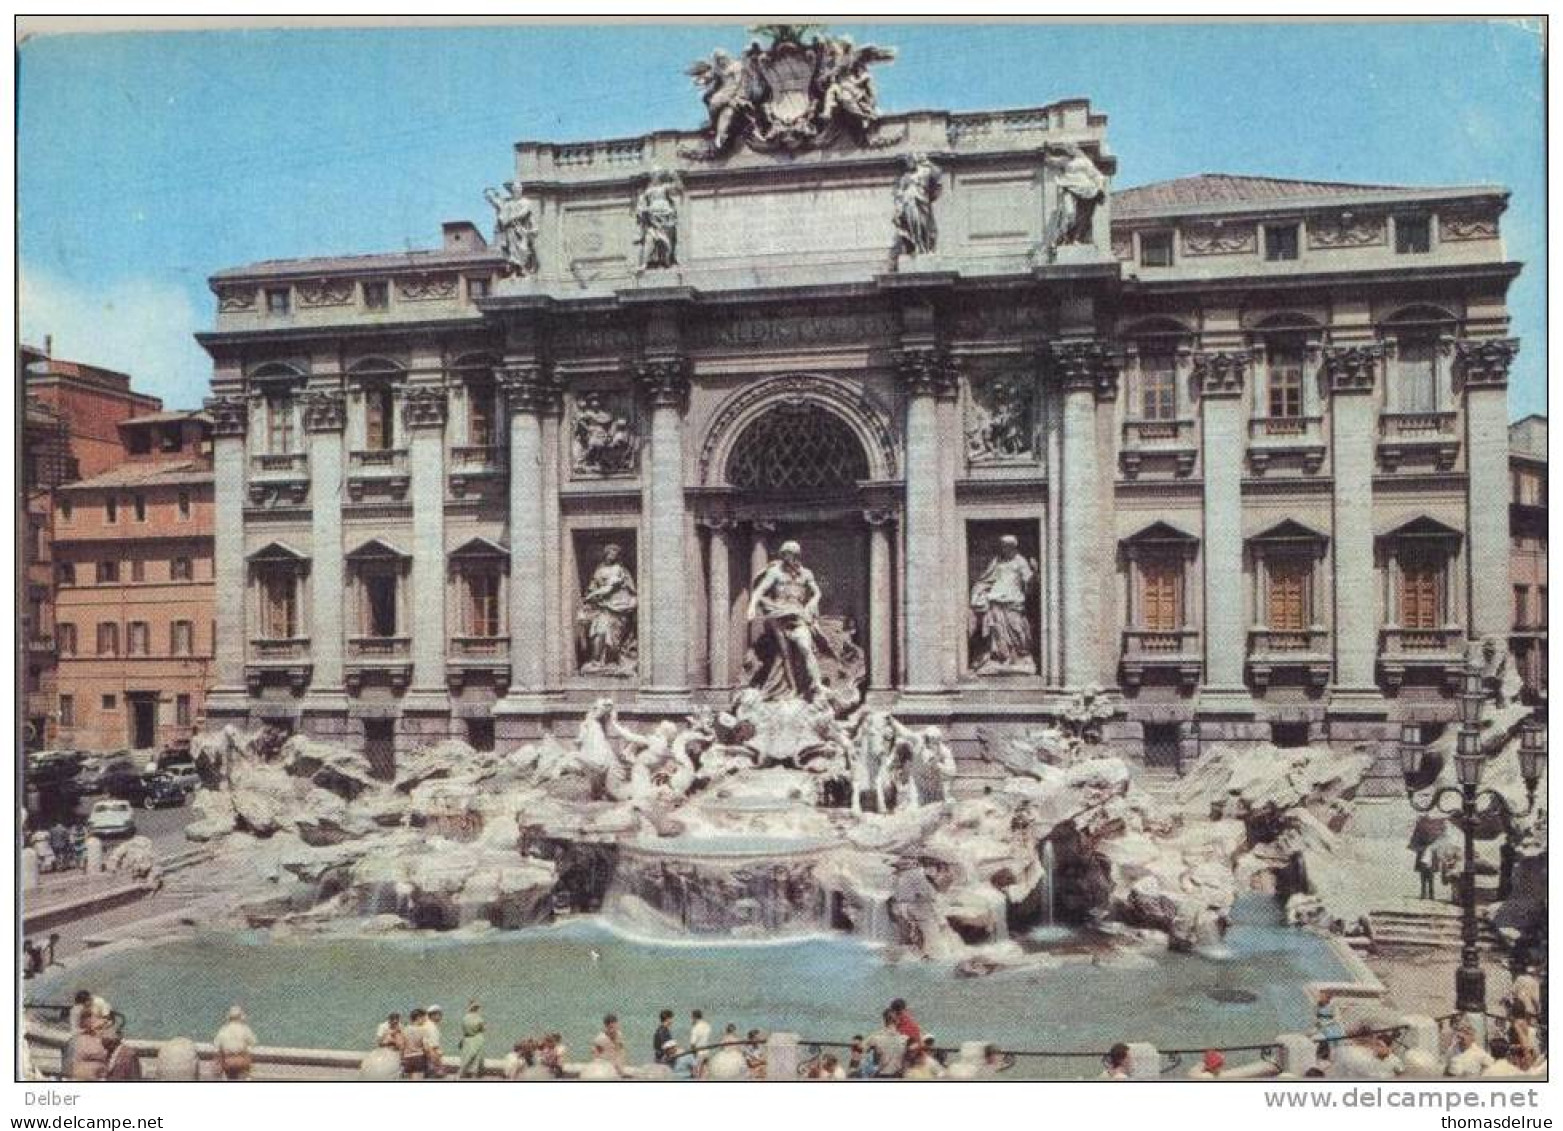 _Hc762: ROMA - Fontana Di Trevi + 1121: DON ORIONE > Paris - Fontana Di Trevi